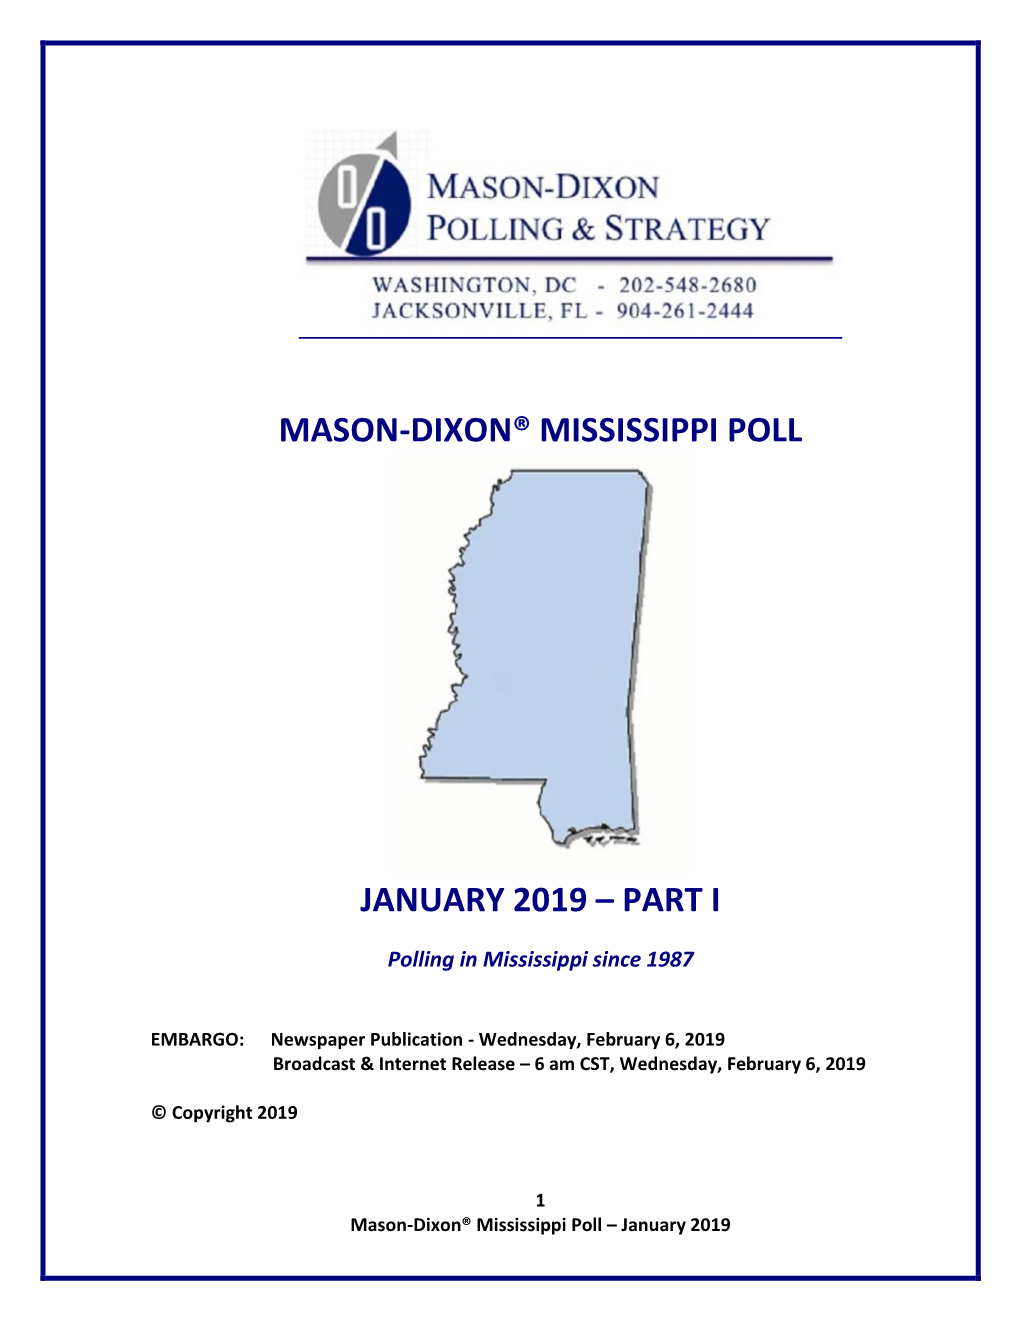 Mason-Dixon® Mississippi Poll January 2019